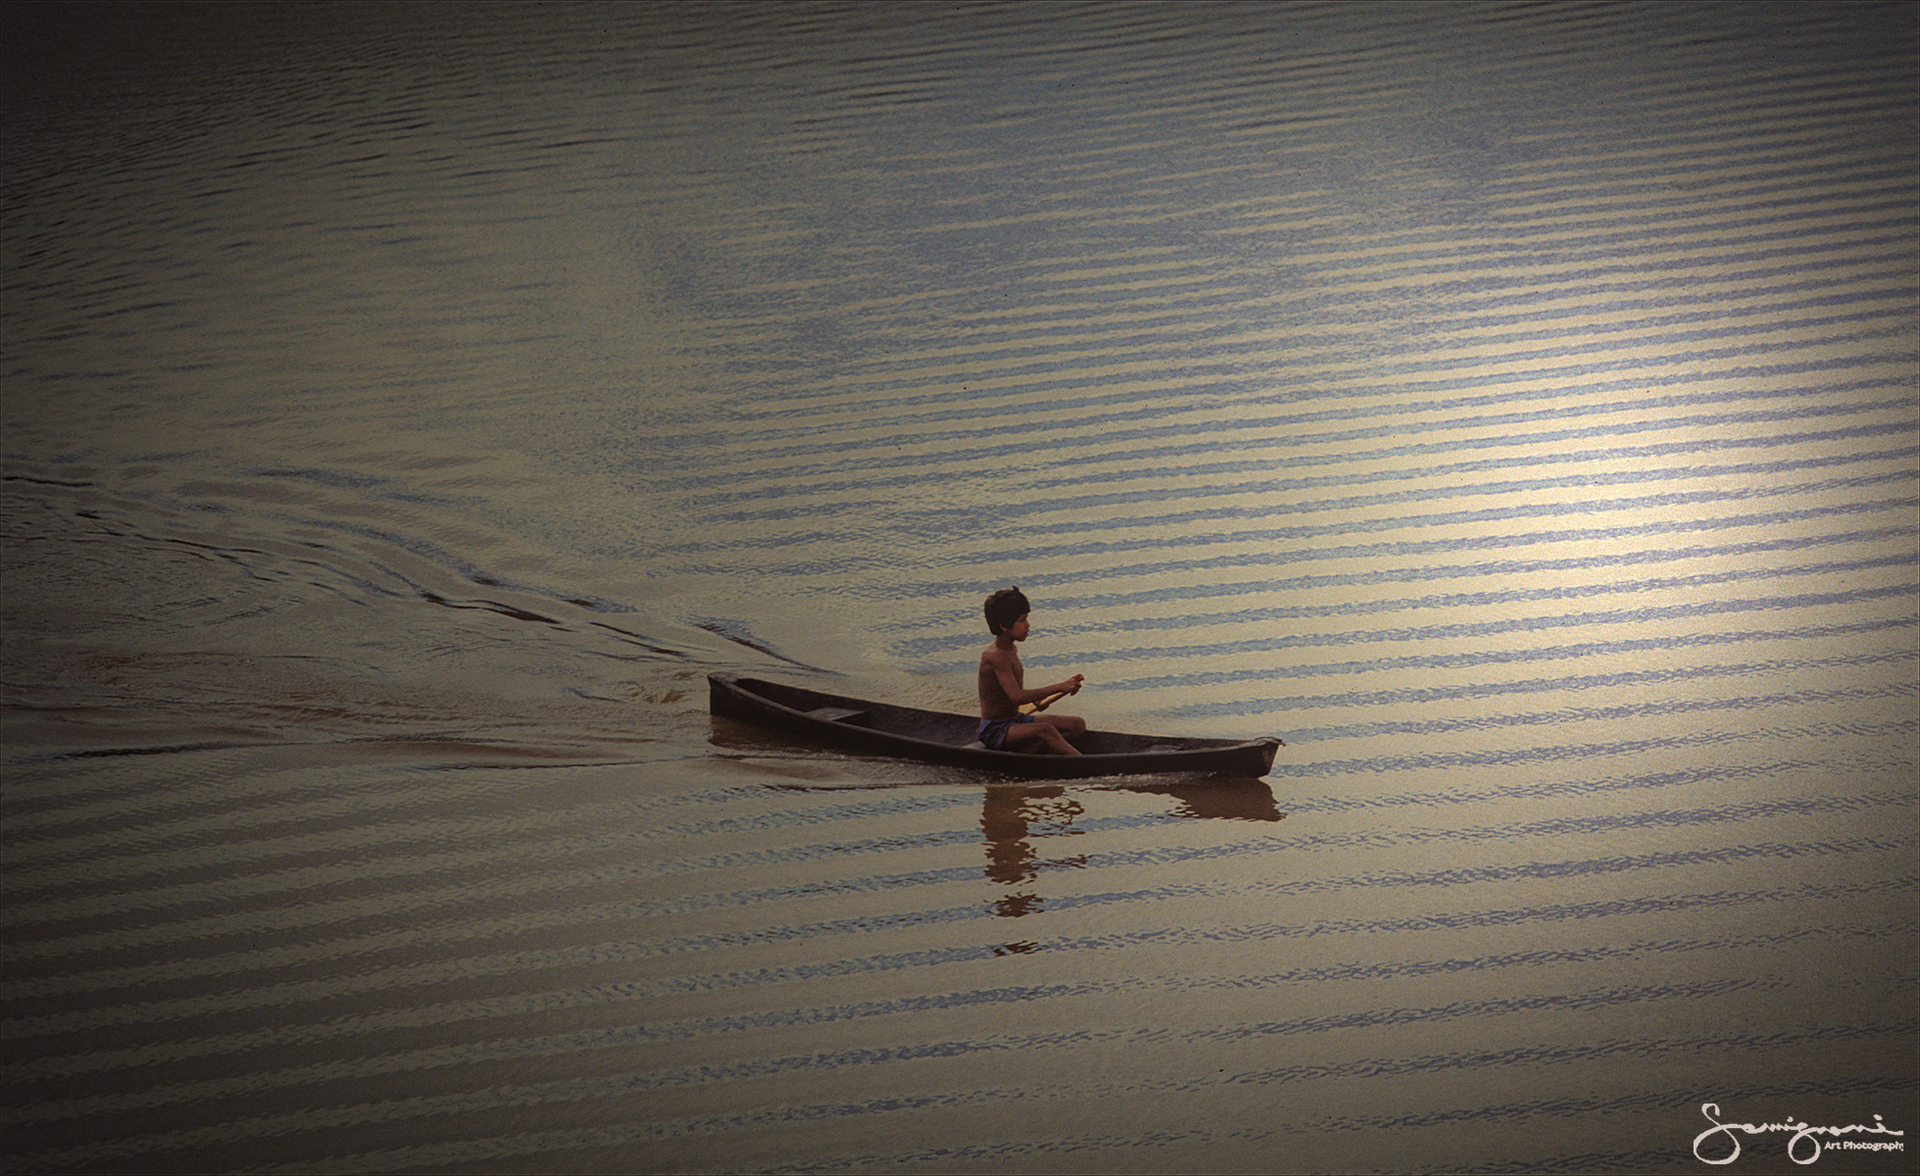 Boy in Dugout Canoe-Breves Narrows-Amazon River, Brazil